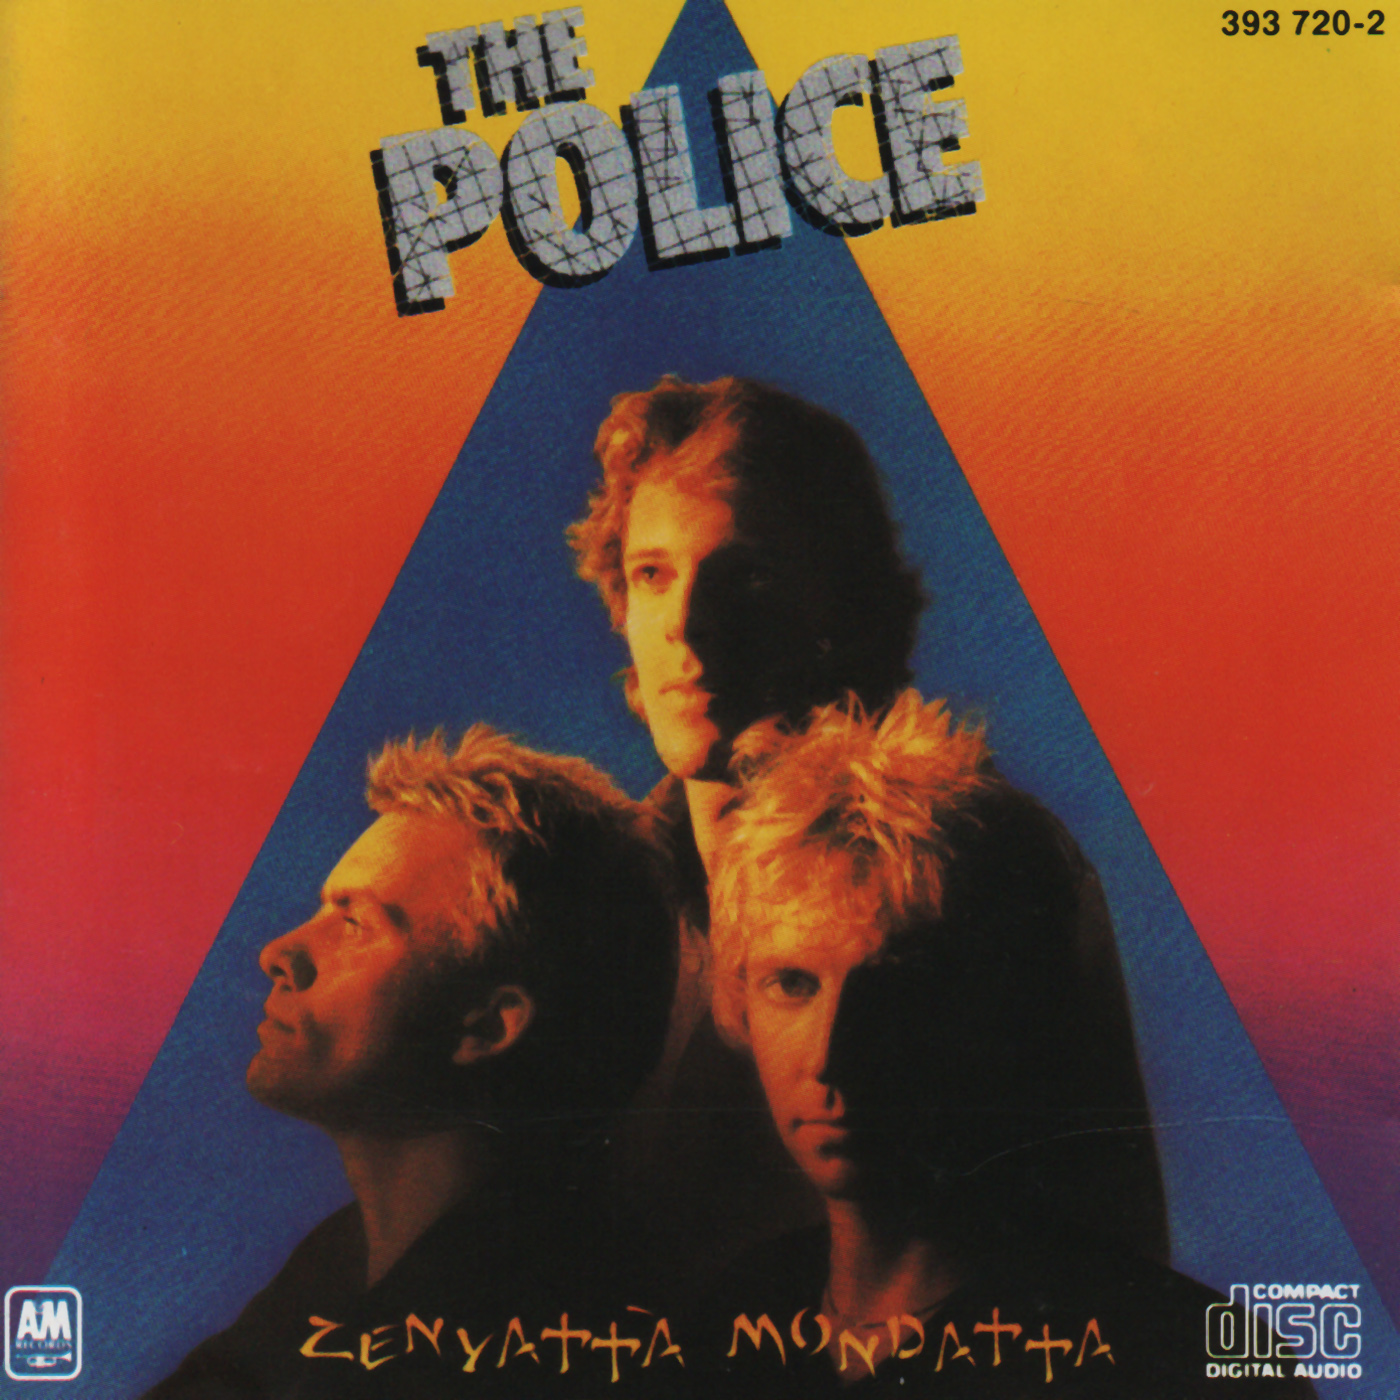 The Police - 1980 - Zenyatta Mondatta [393 720-2]